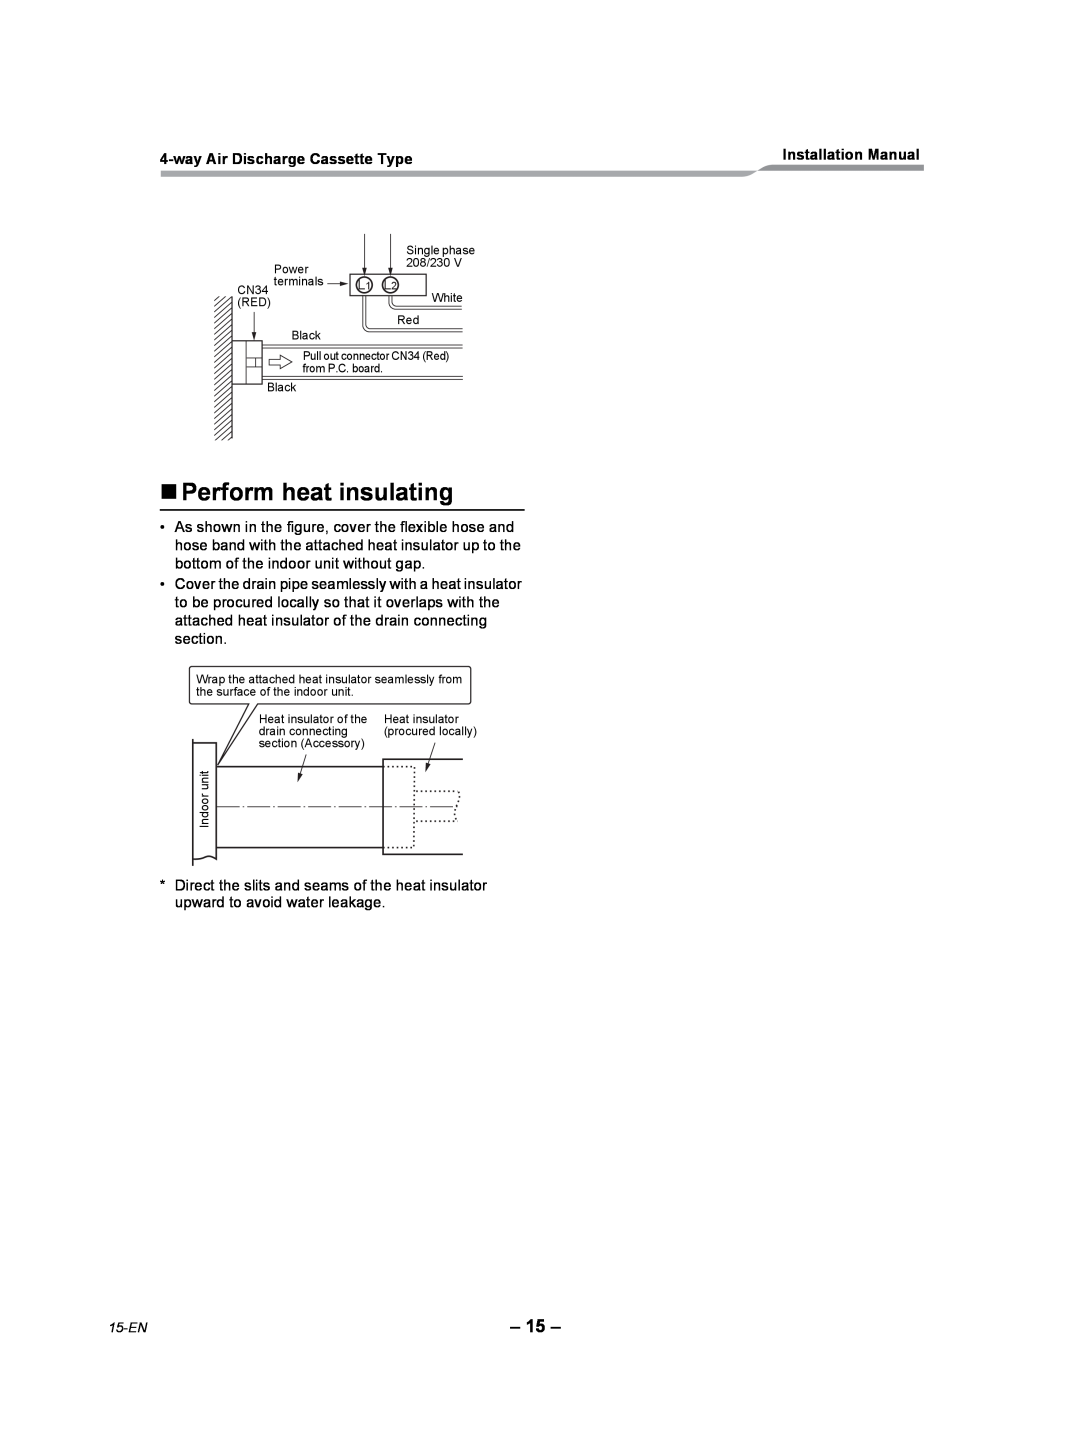 Toshiba RAV-SP180UT-UL installation manual „Perform heat insulating, wayAir Discharge Cassette Type 